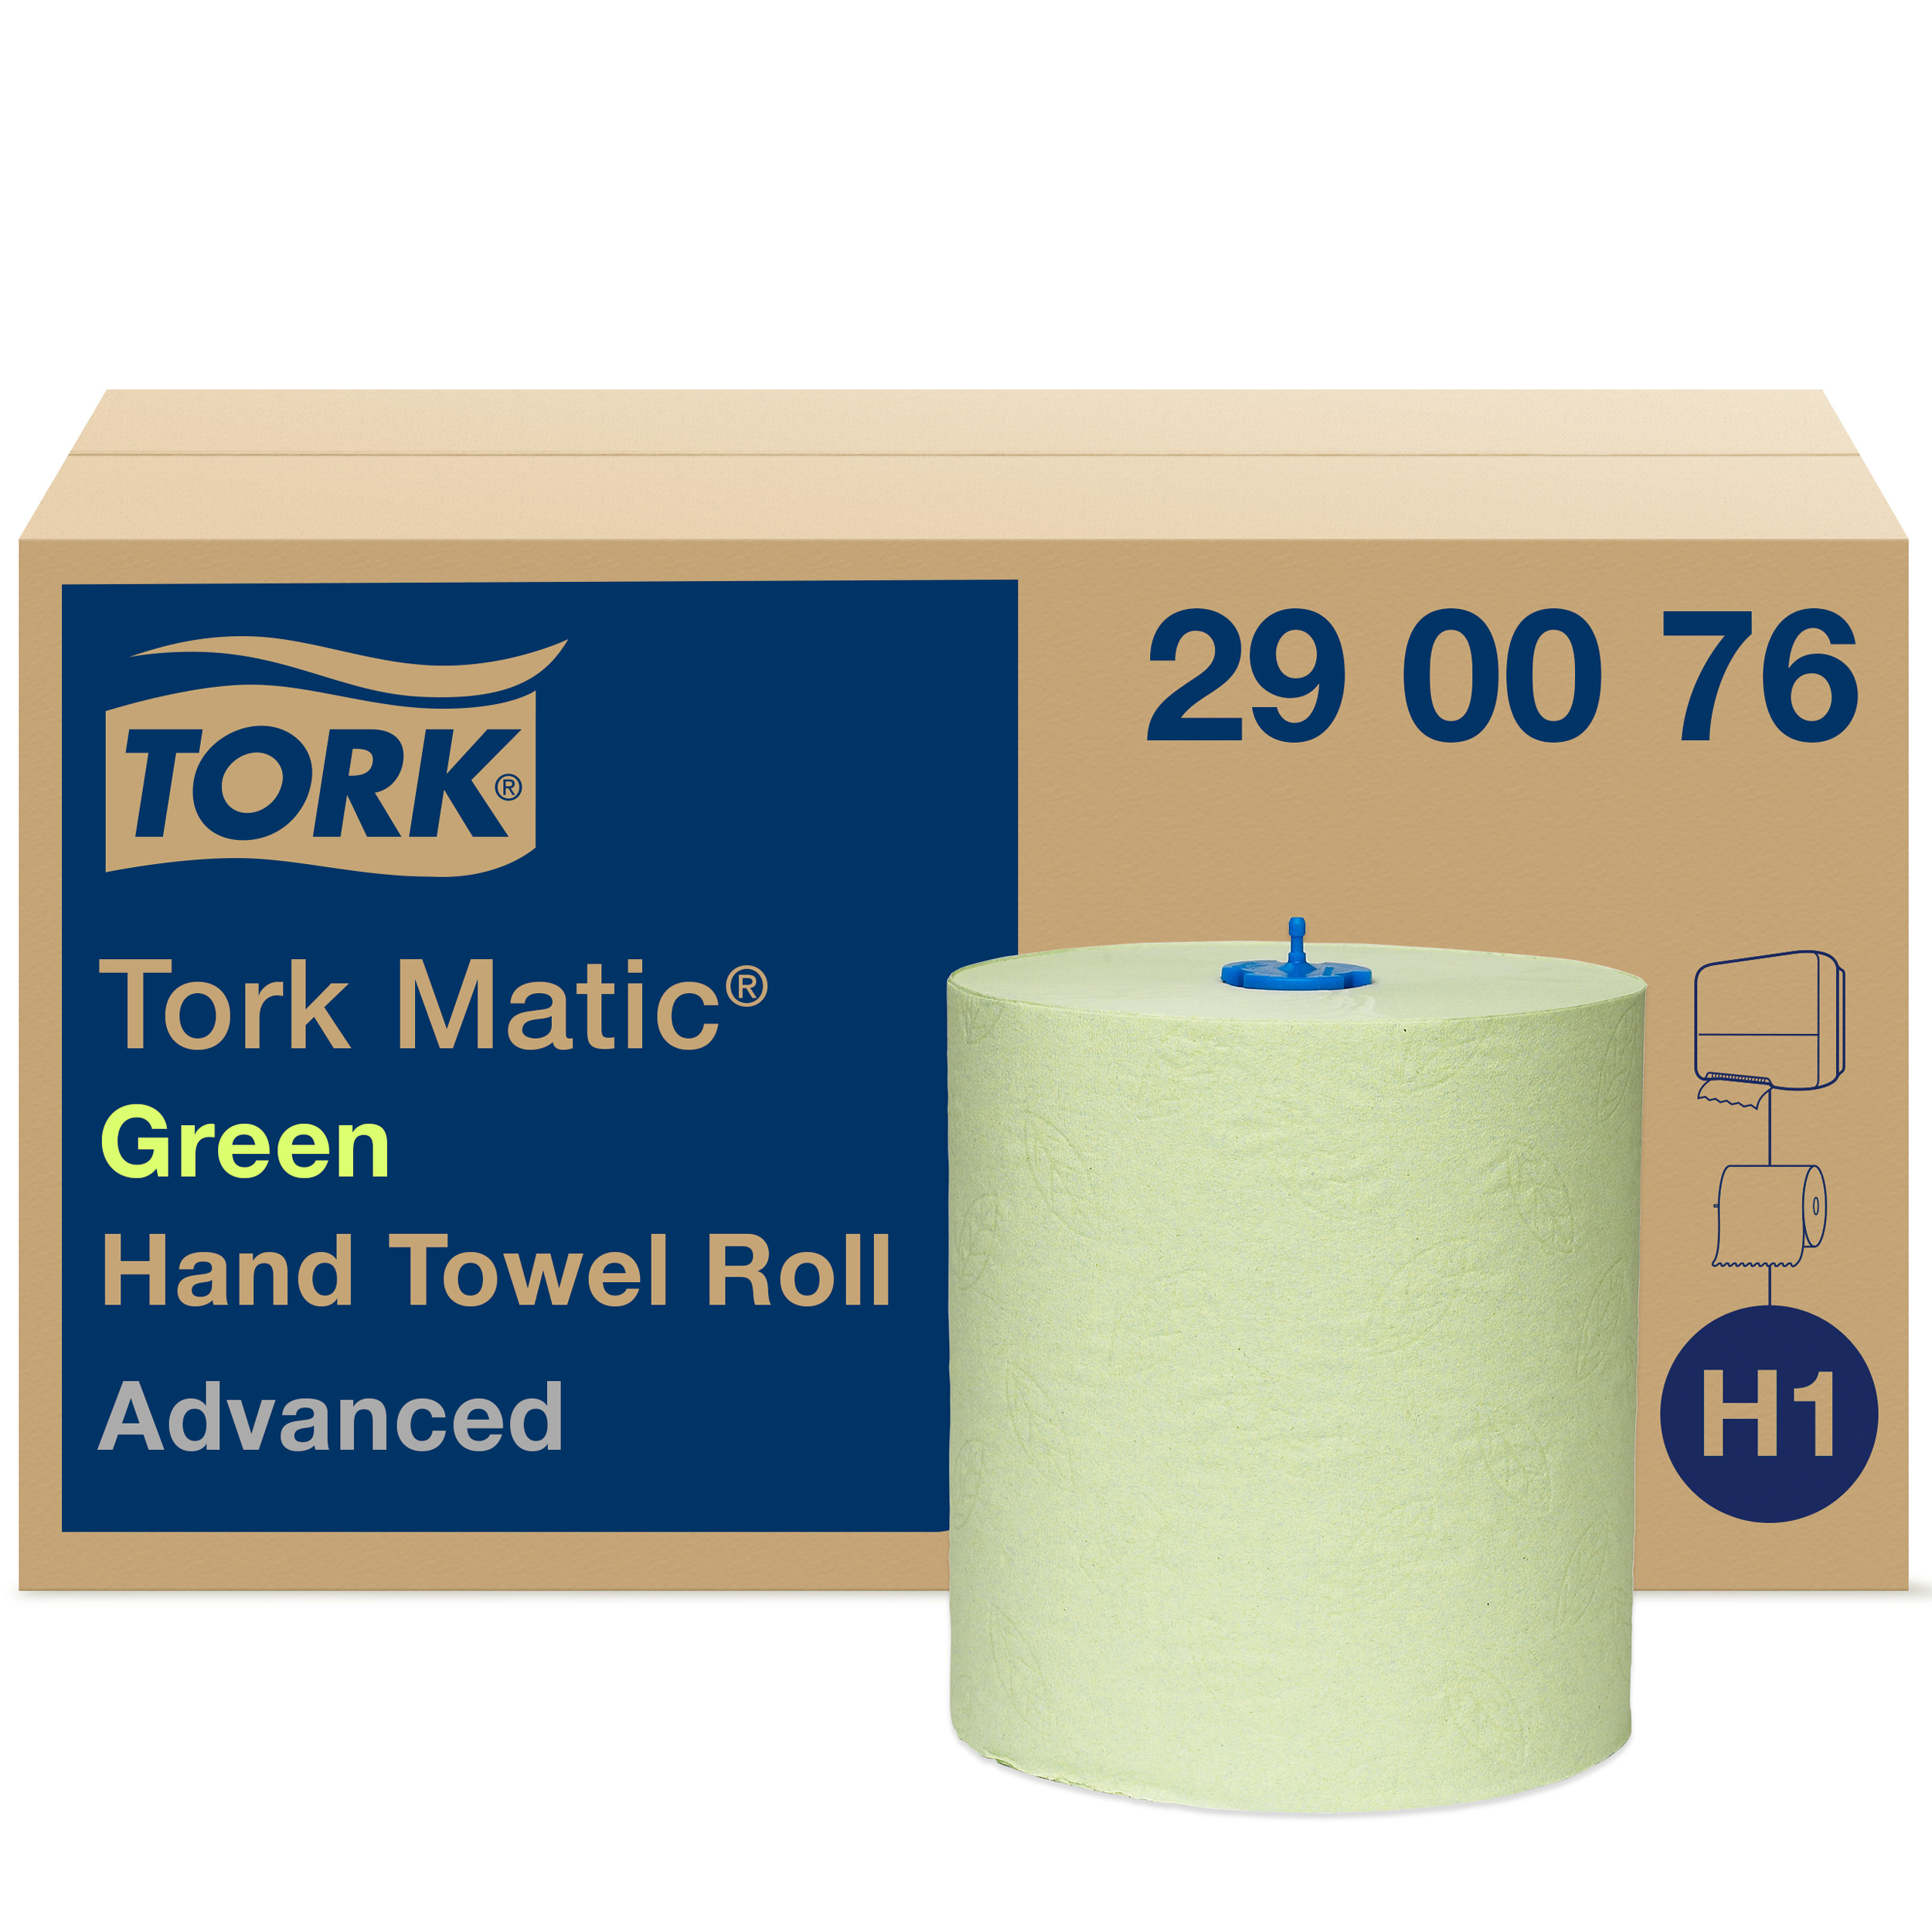 Полотенце 190. Бумажные полотенца Tork Advanced h1 290076, в рулоне, 150м, 2 слоя, зеленые. Tork 290076. Торк матик hand Towel Roll диспенсер. Полотенца бумажные в рулонах Tork matic "Advanced"(h1), 2-слойные, 150м/.